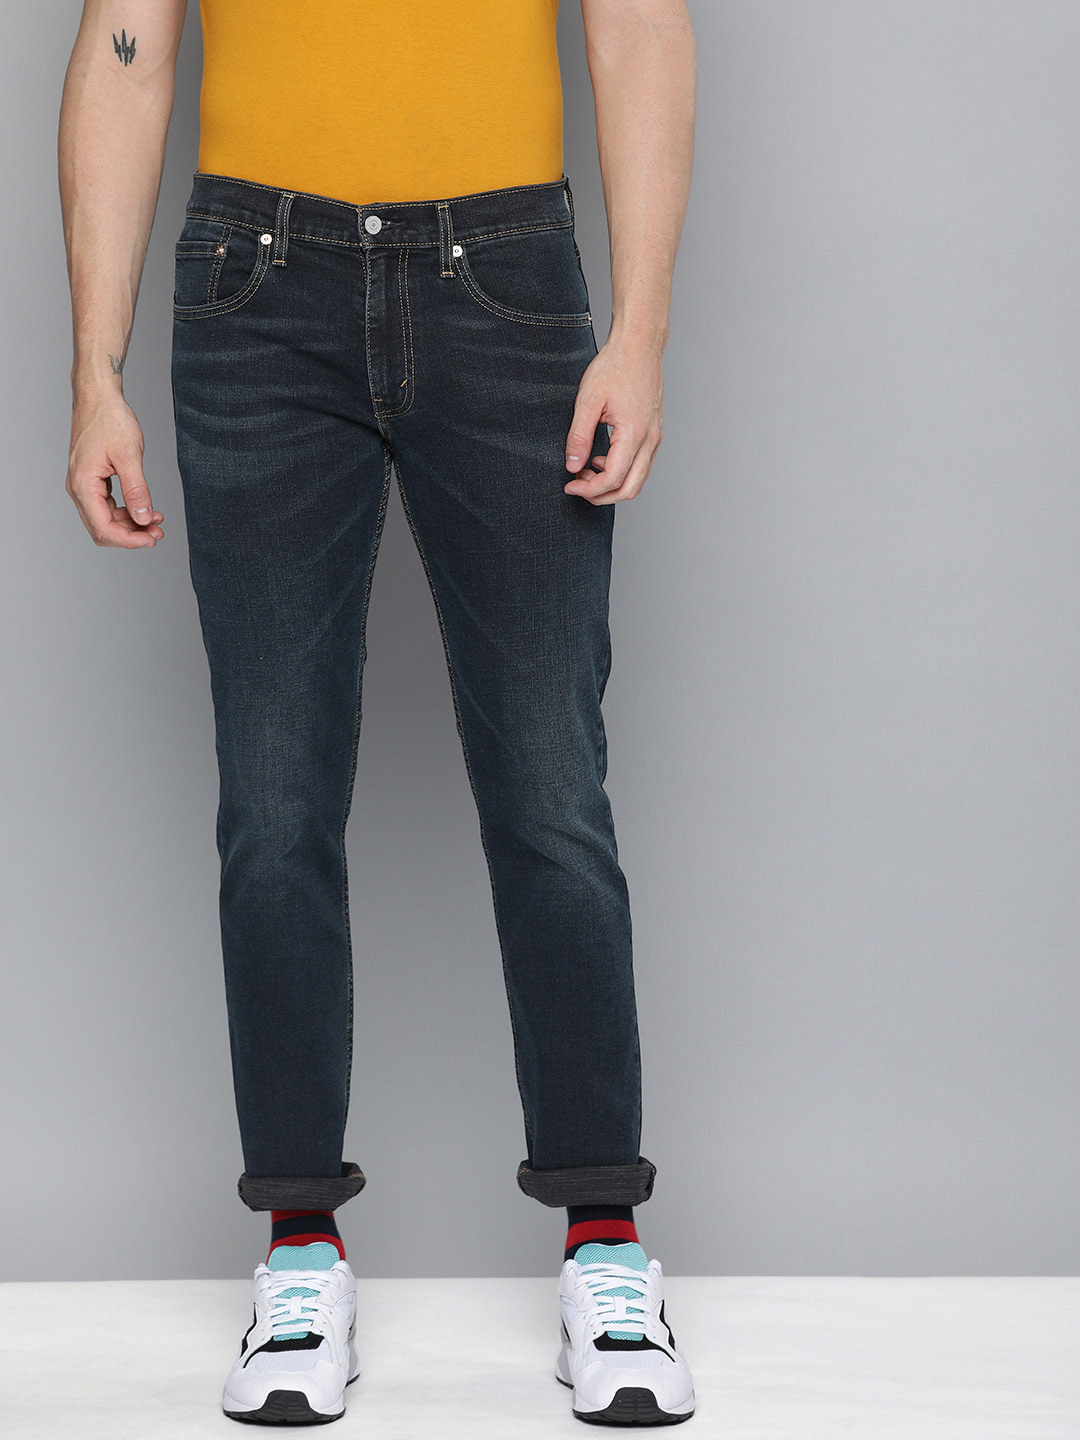 levis navy jeans